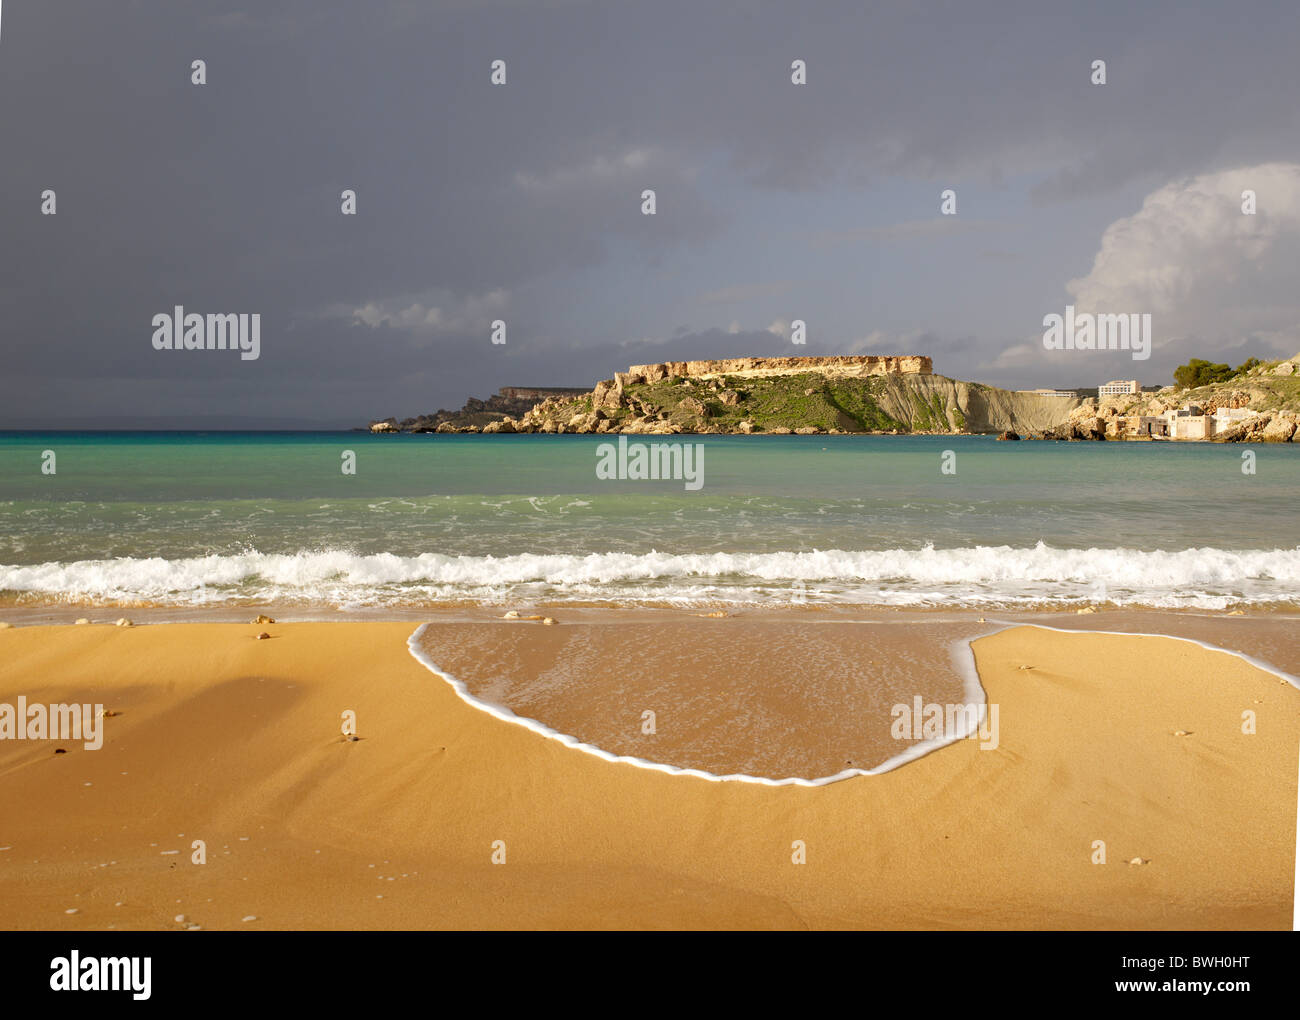 Beach, Golden Bay, Malta island country, Southern Europe Stock Photo